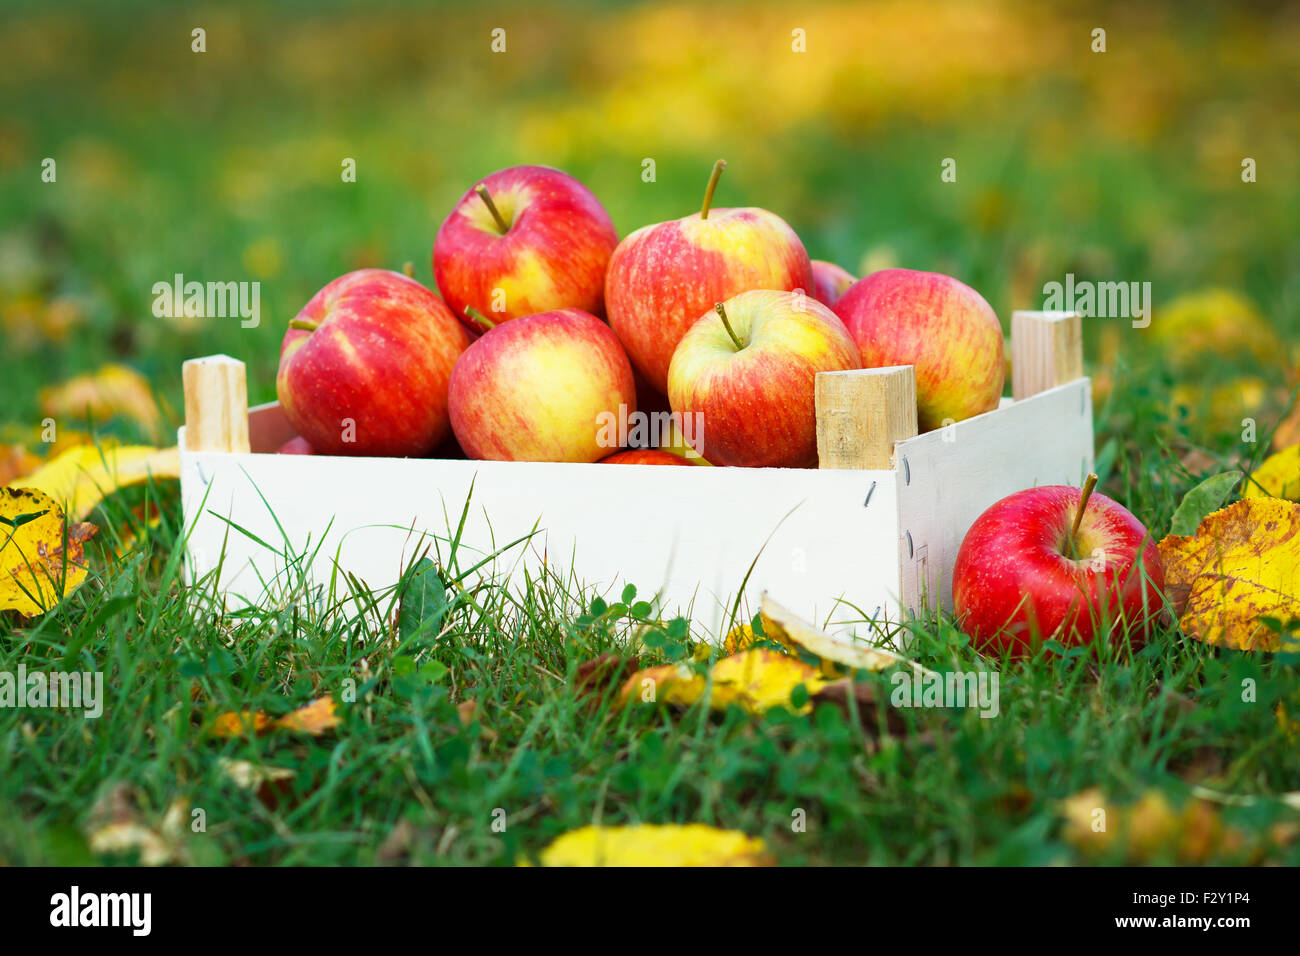 Ripe apples in wooden box in garden. Autumn scenery Stock Photo